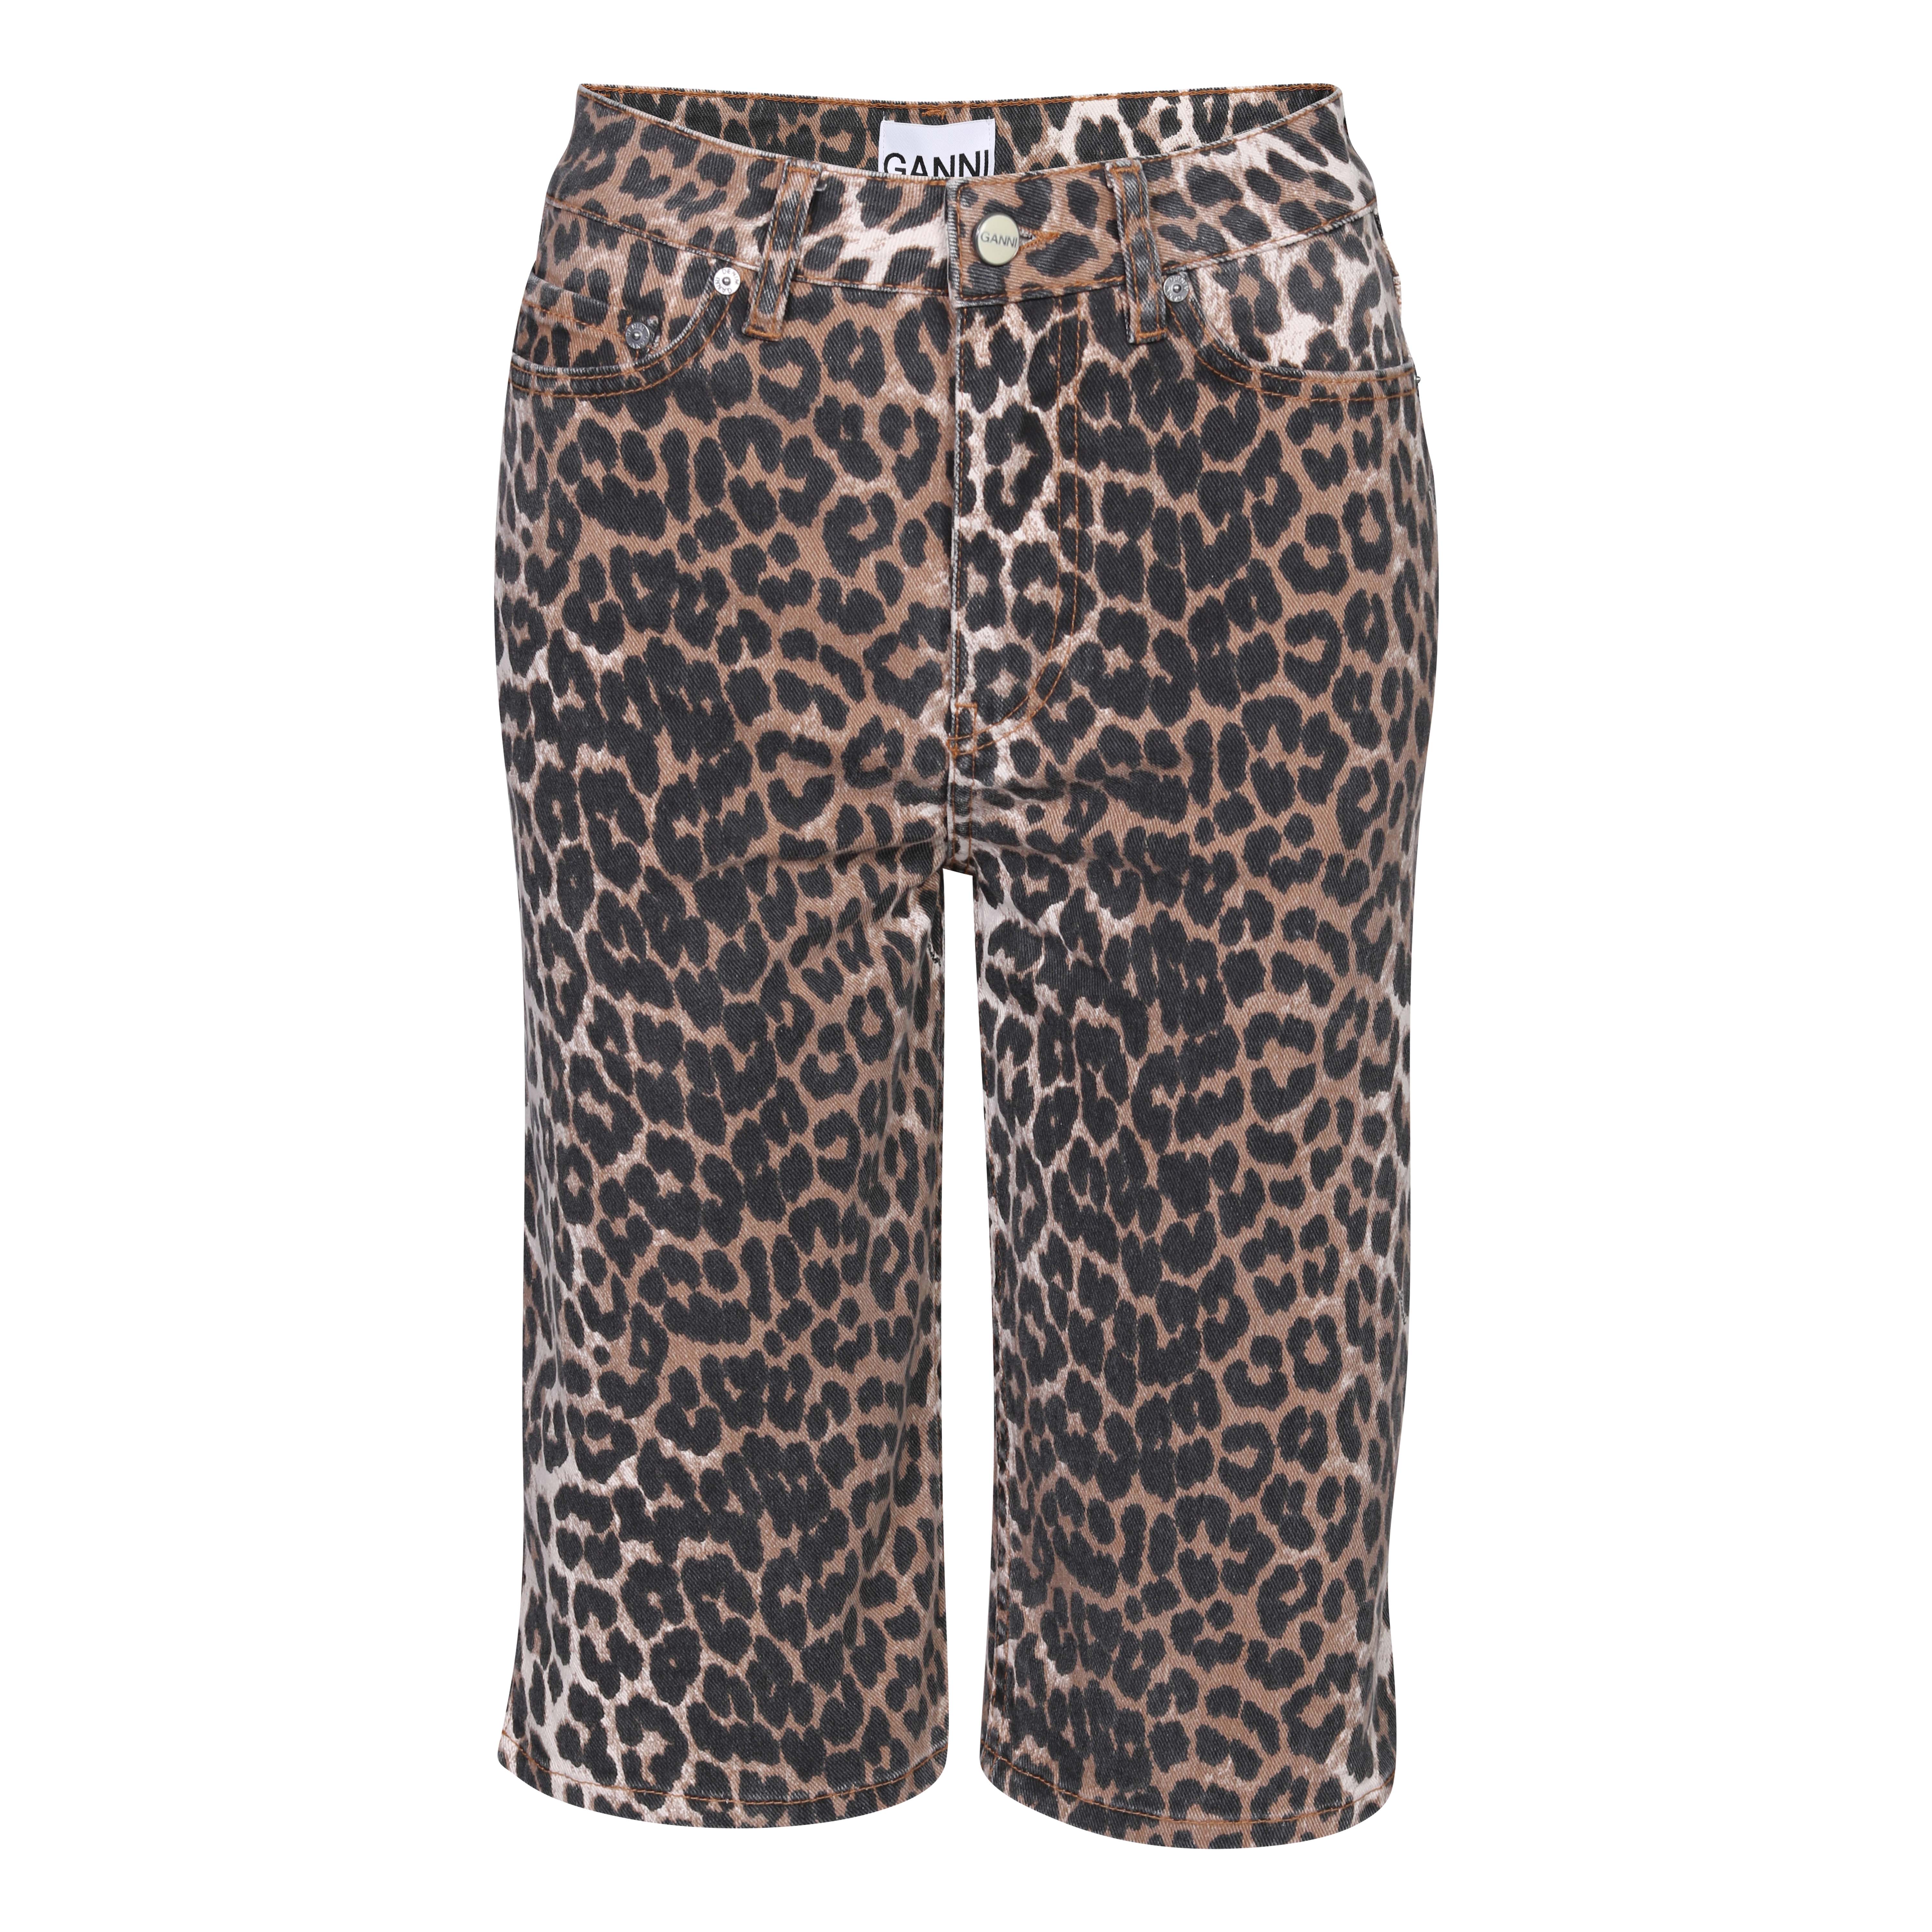 Ganni Knee Length Denim Shorts in Leopard 25